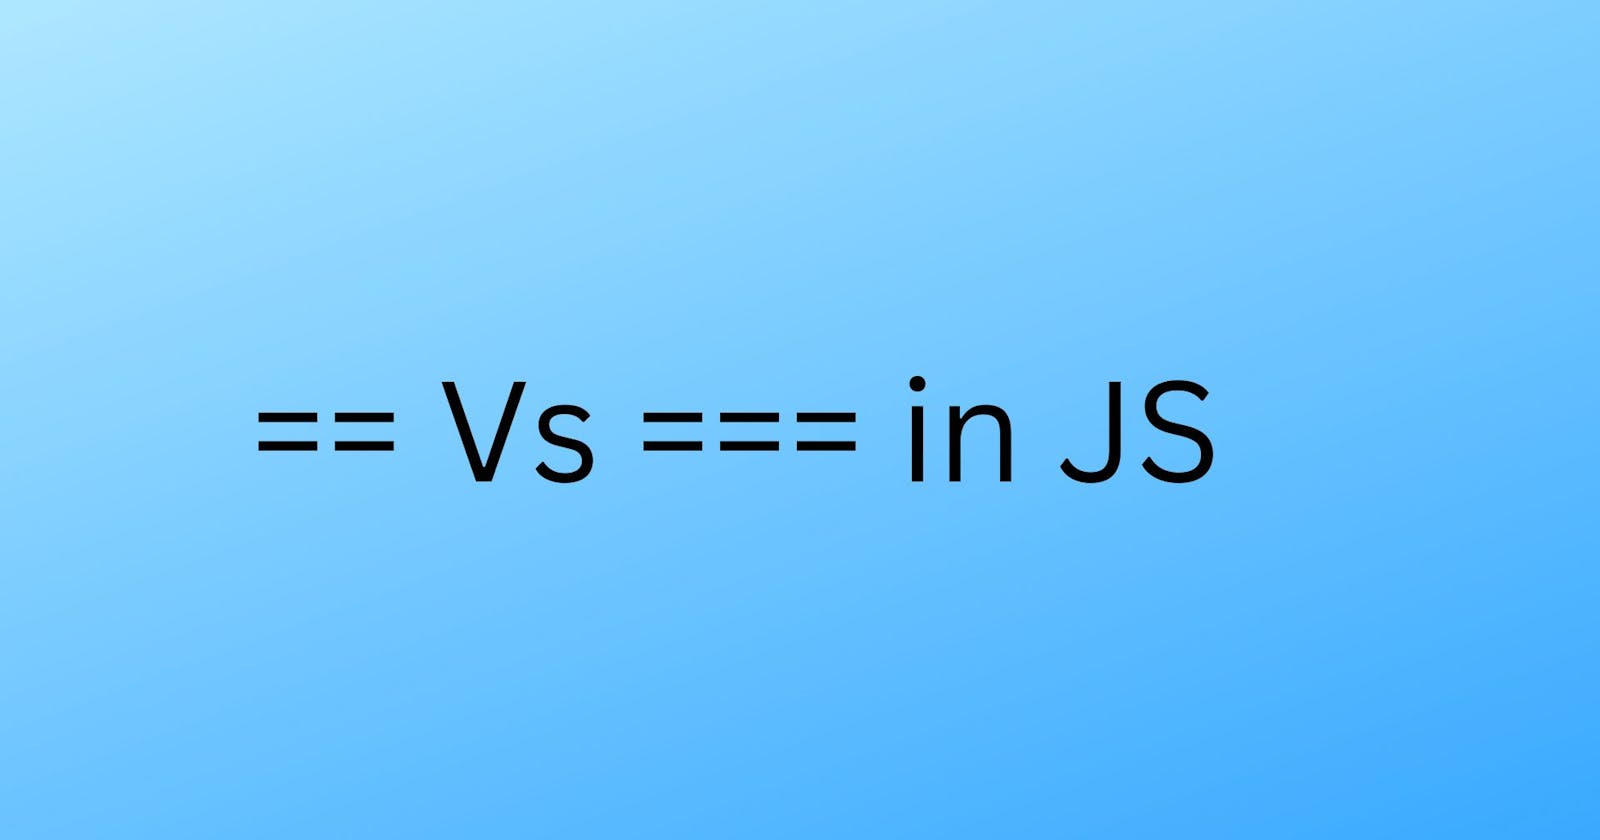 Equality operators in JavaScript